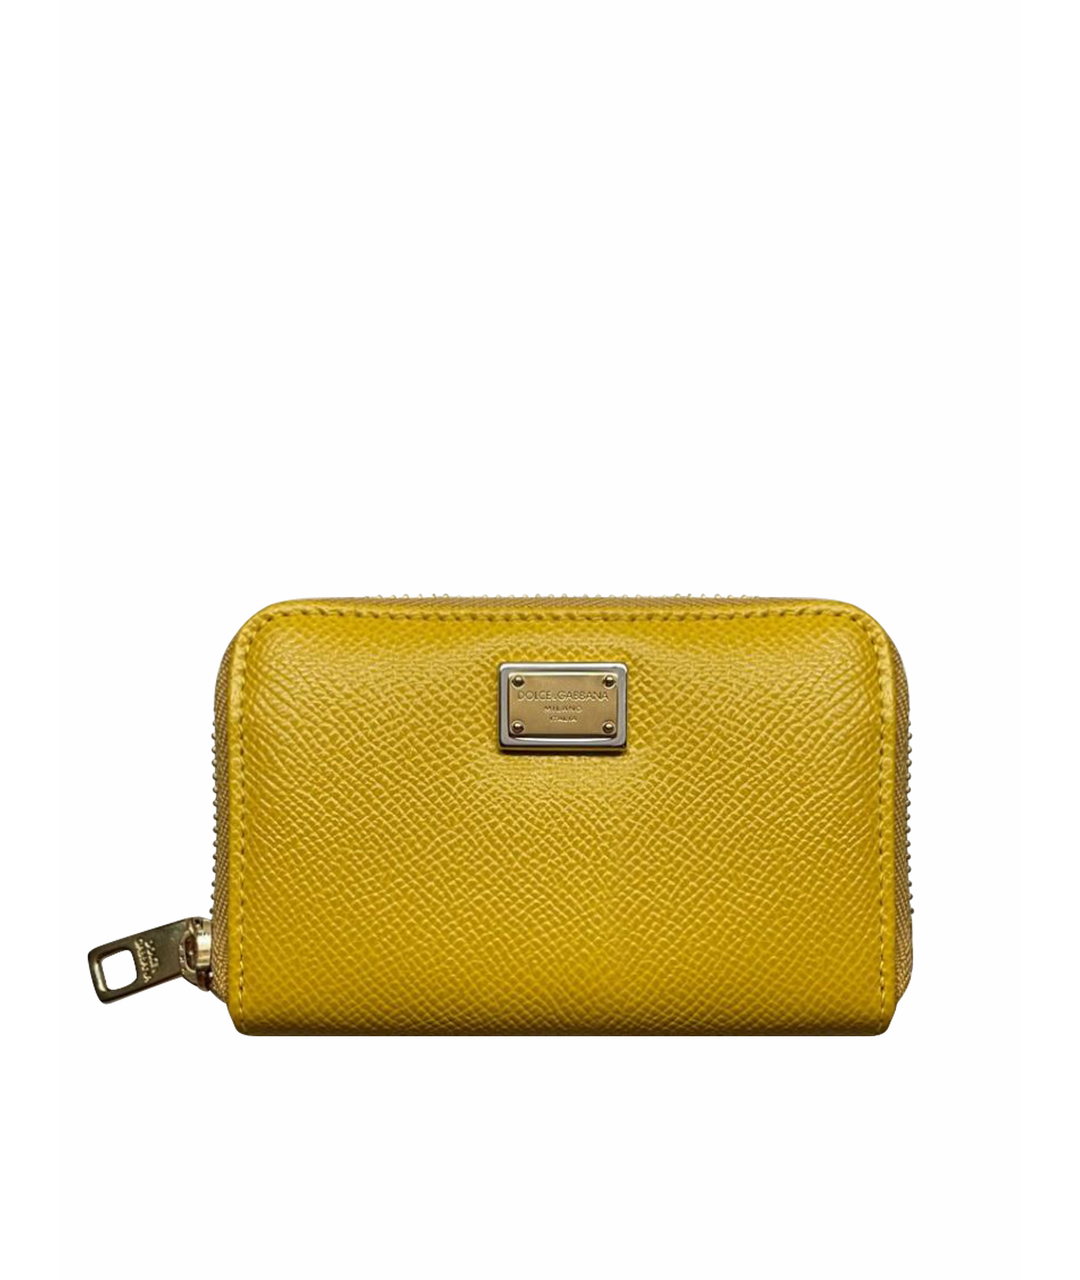 DOLCE&GABBANA Желтый кожаный кошелек, фото 1